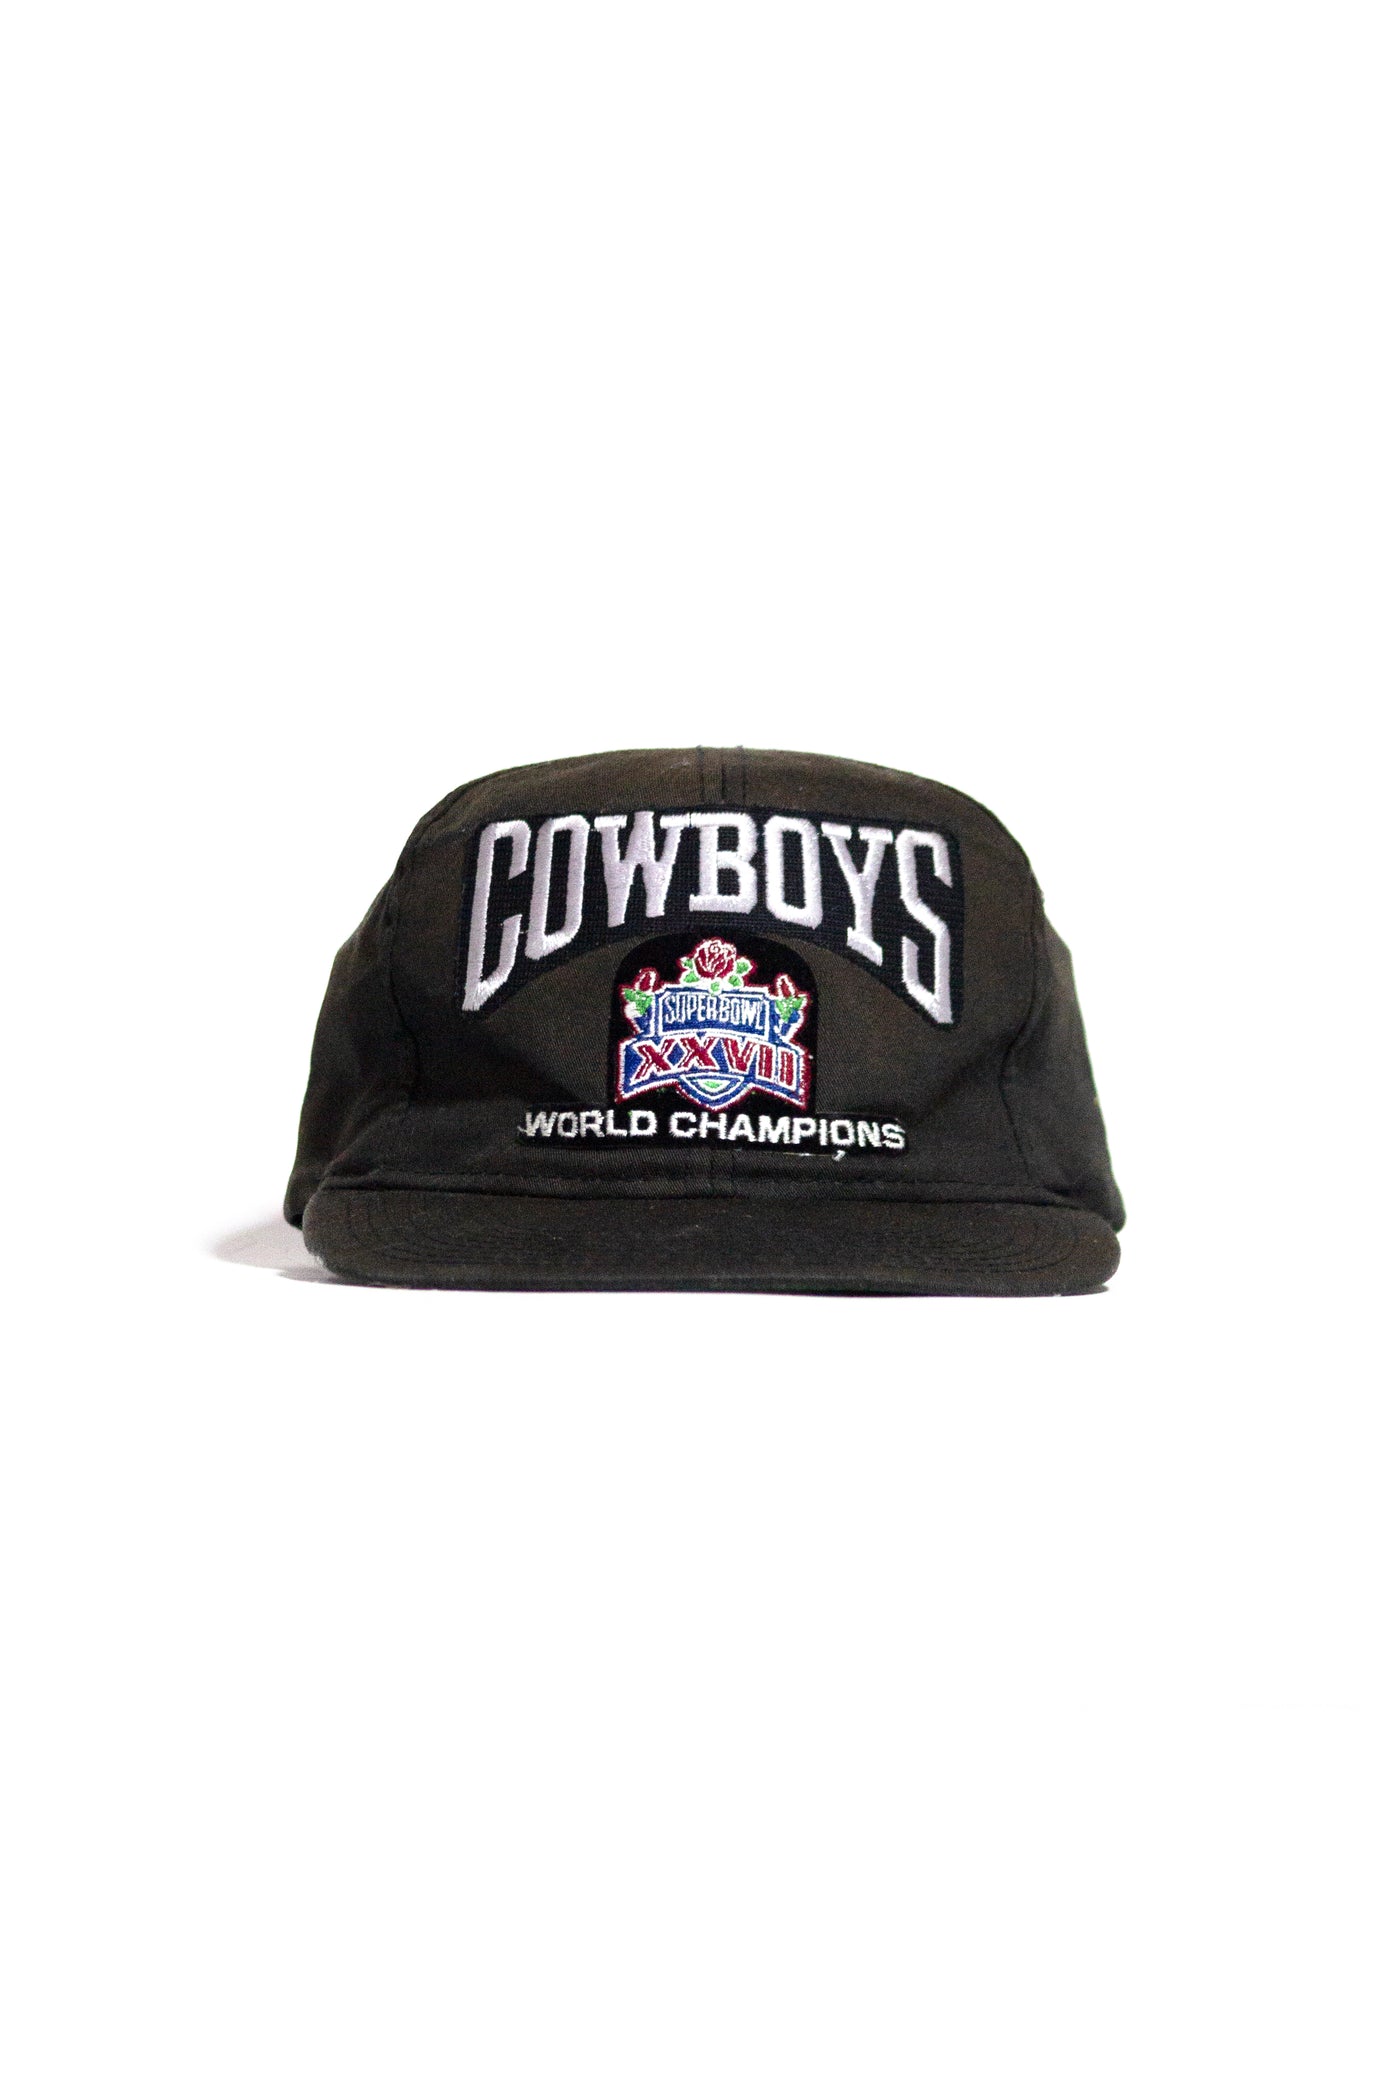 Vintage 1993 Cowboys Rose Bowl Champions Snapback